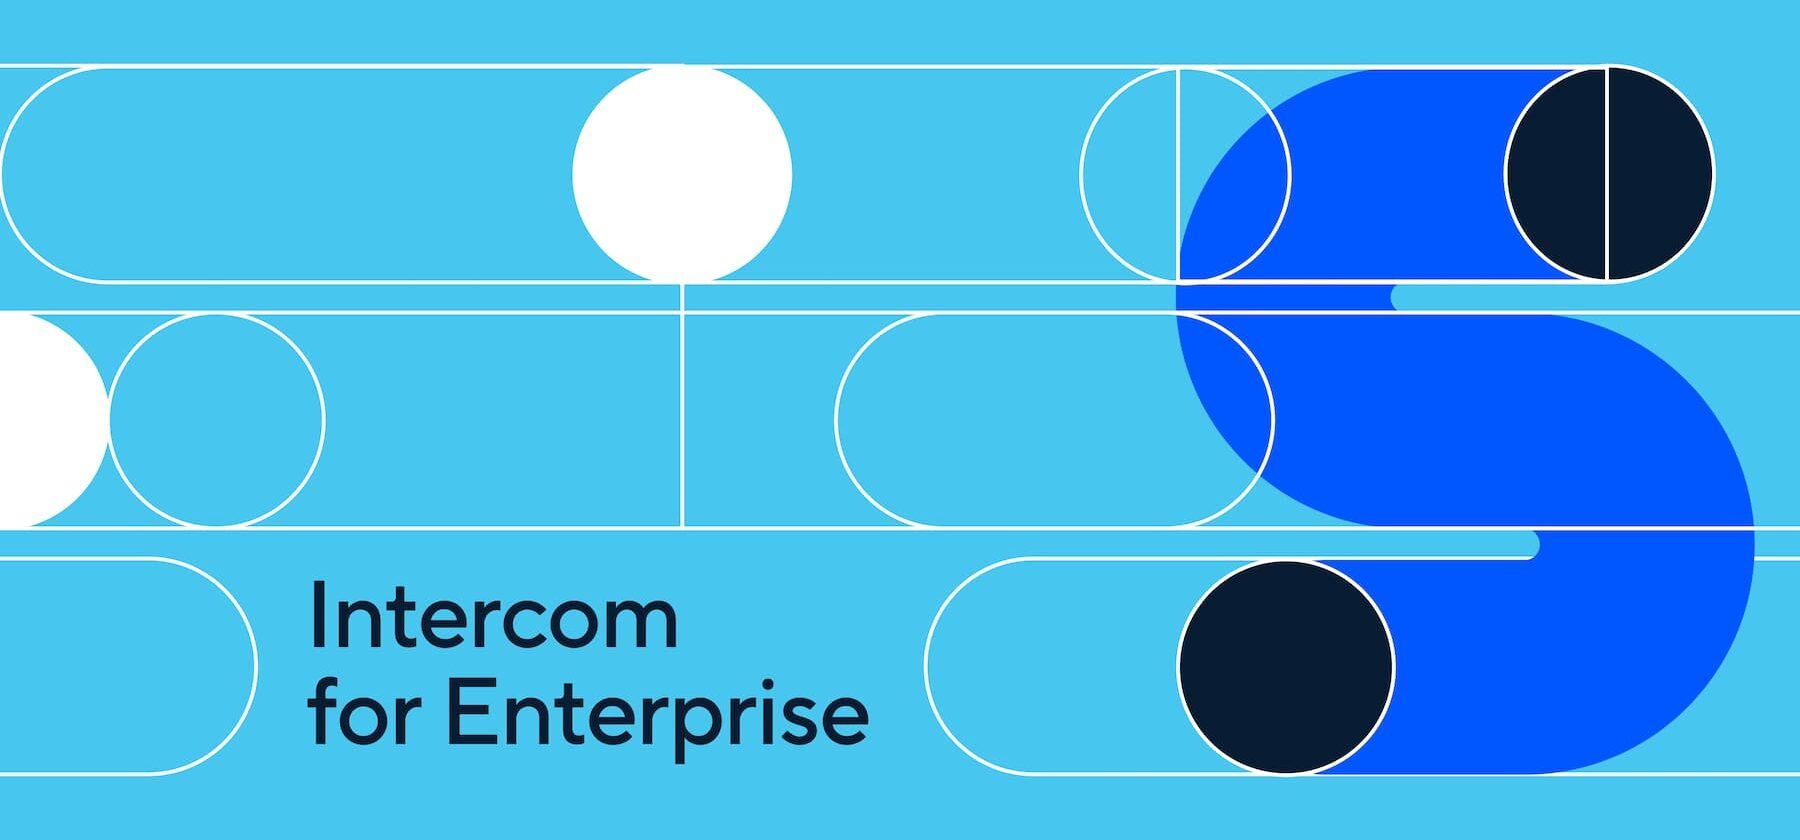 Intercom for Enterprise - Infrastructure & Scale